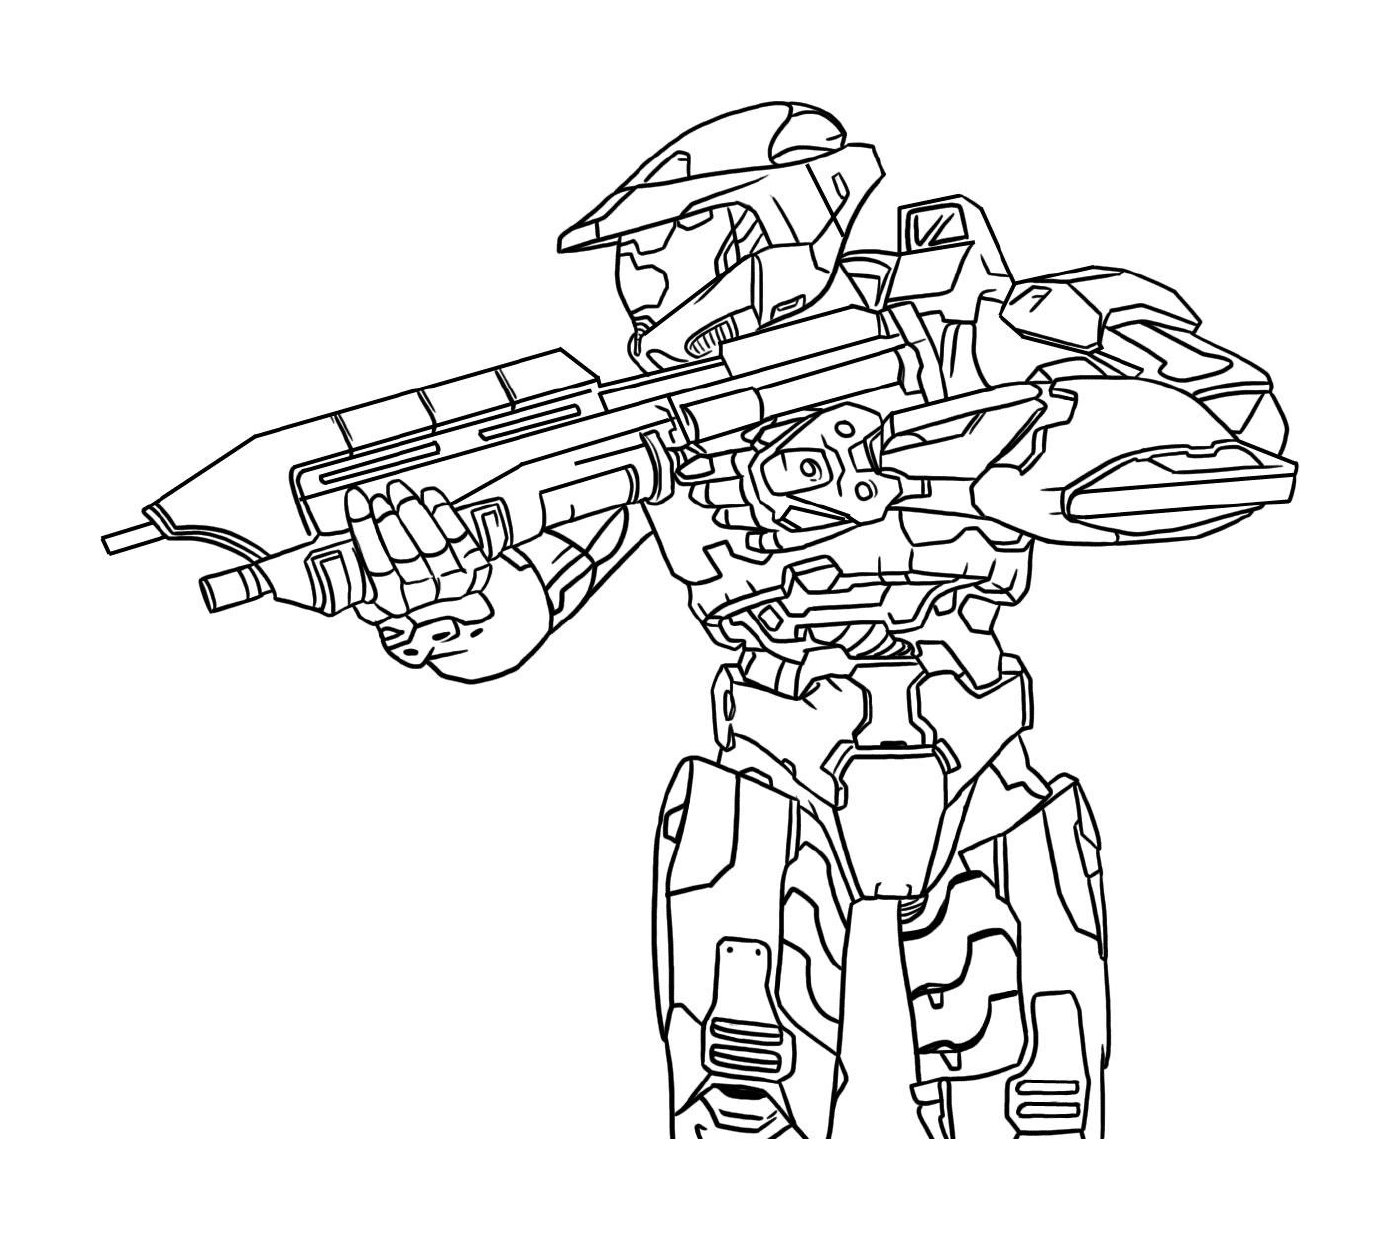  Robot holding a rifle 